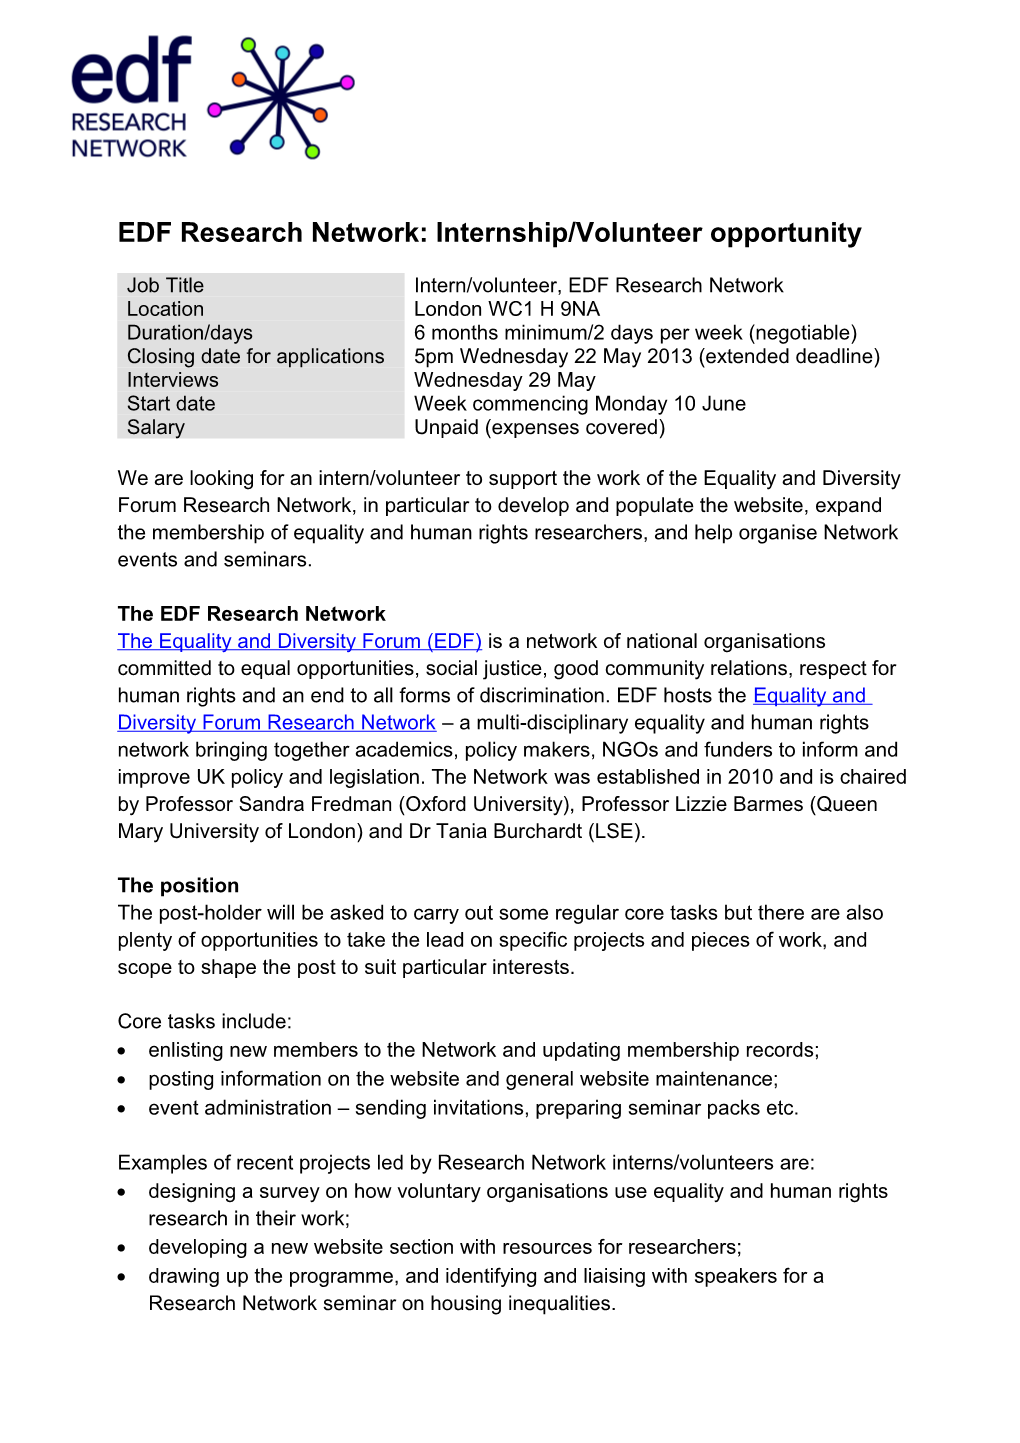 EDF Research Network: Internship/Volunteer Opportunity